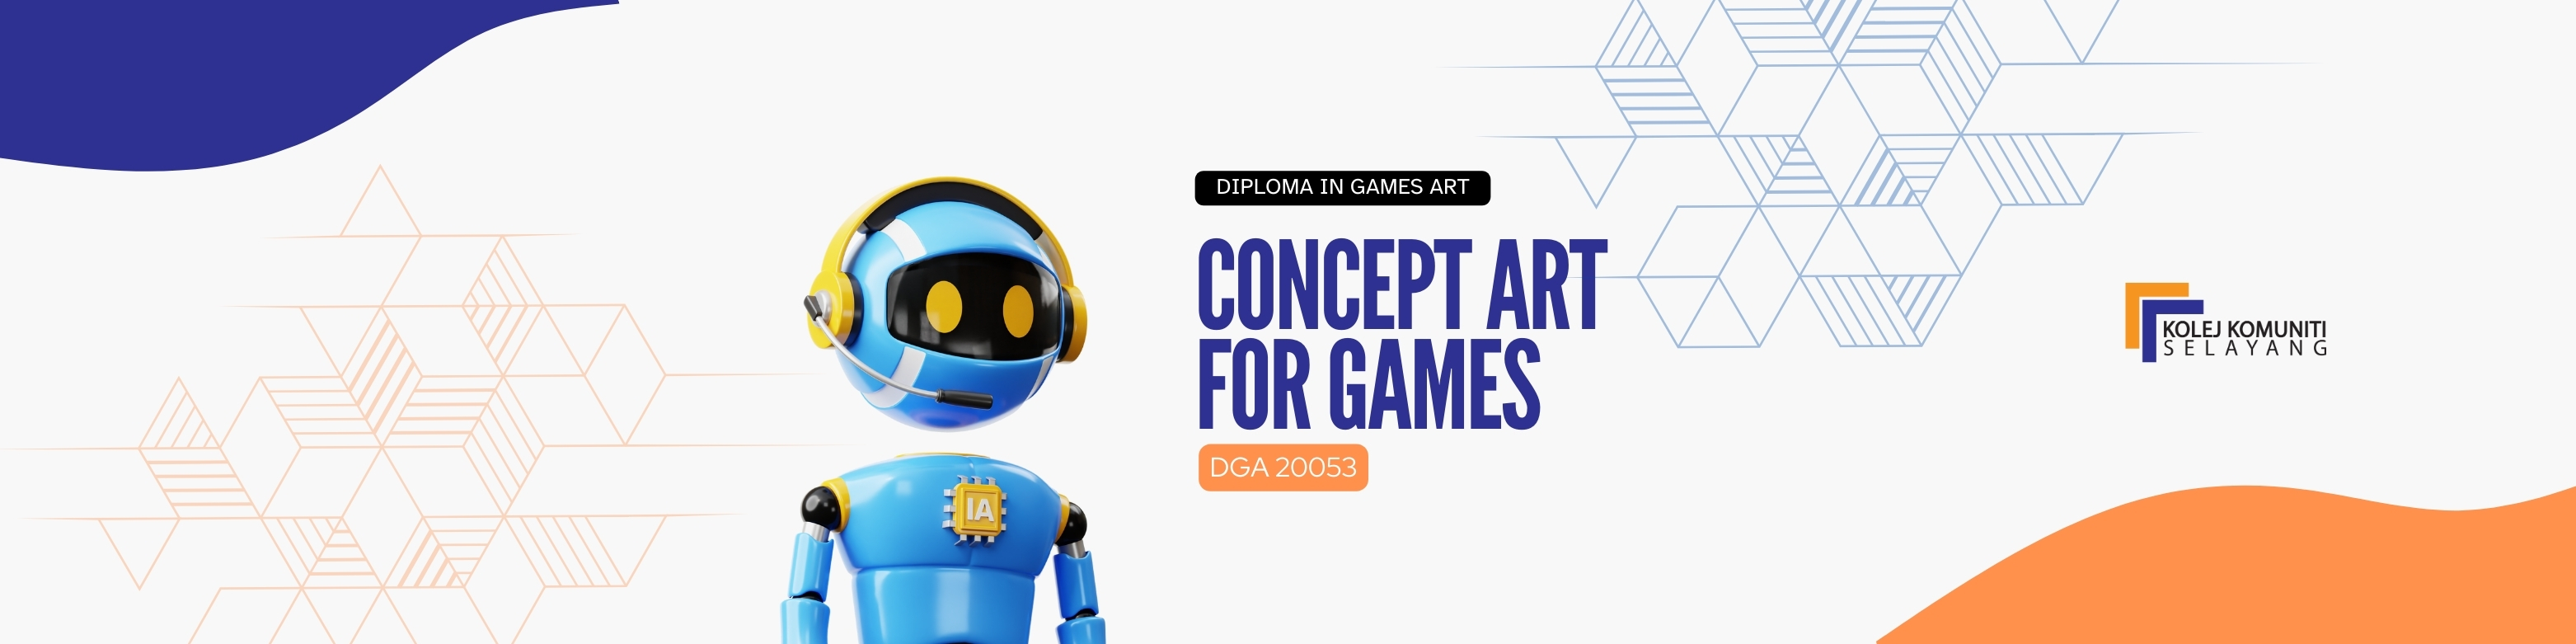 DGA20053 - CONCEPT ART FOR GAMES